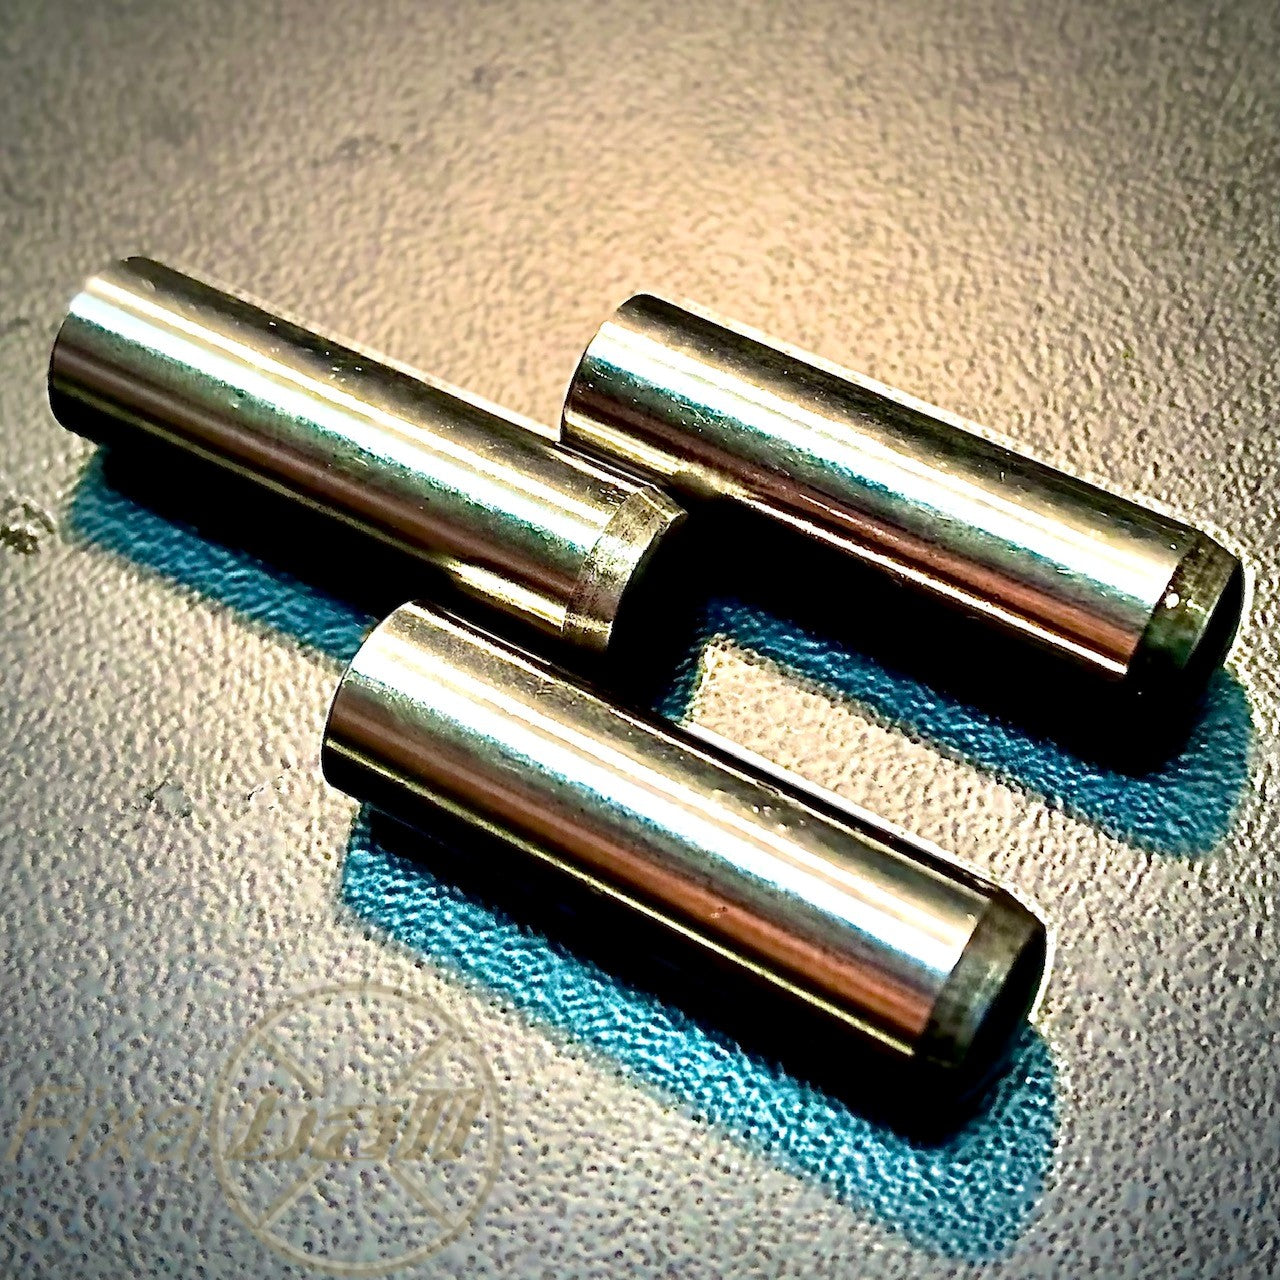 16mm Dowel Pins Hardened & Ground, Steel, DIN 6325 Dowel Pins 16mm Dowel Pins Hardened & Ground, Steel, DIN 6325 Dowel Pins – Harden and Ground